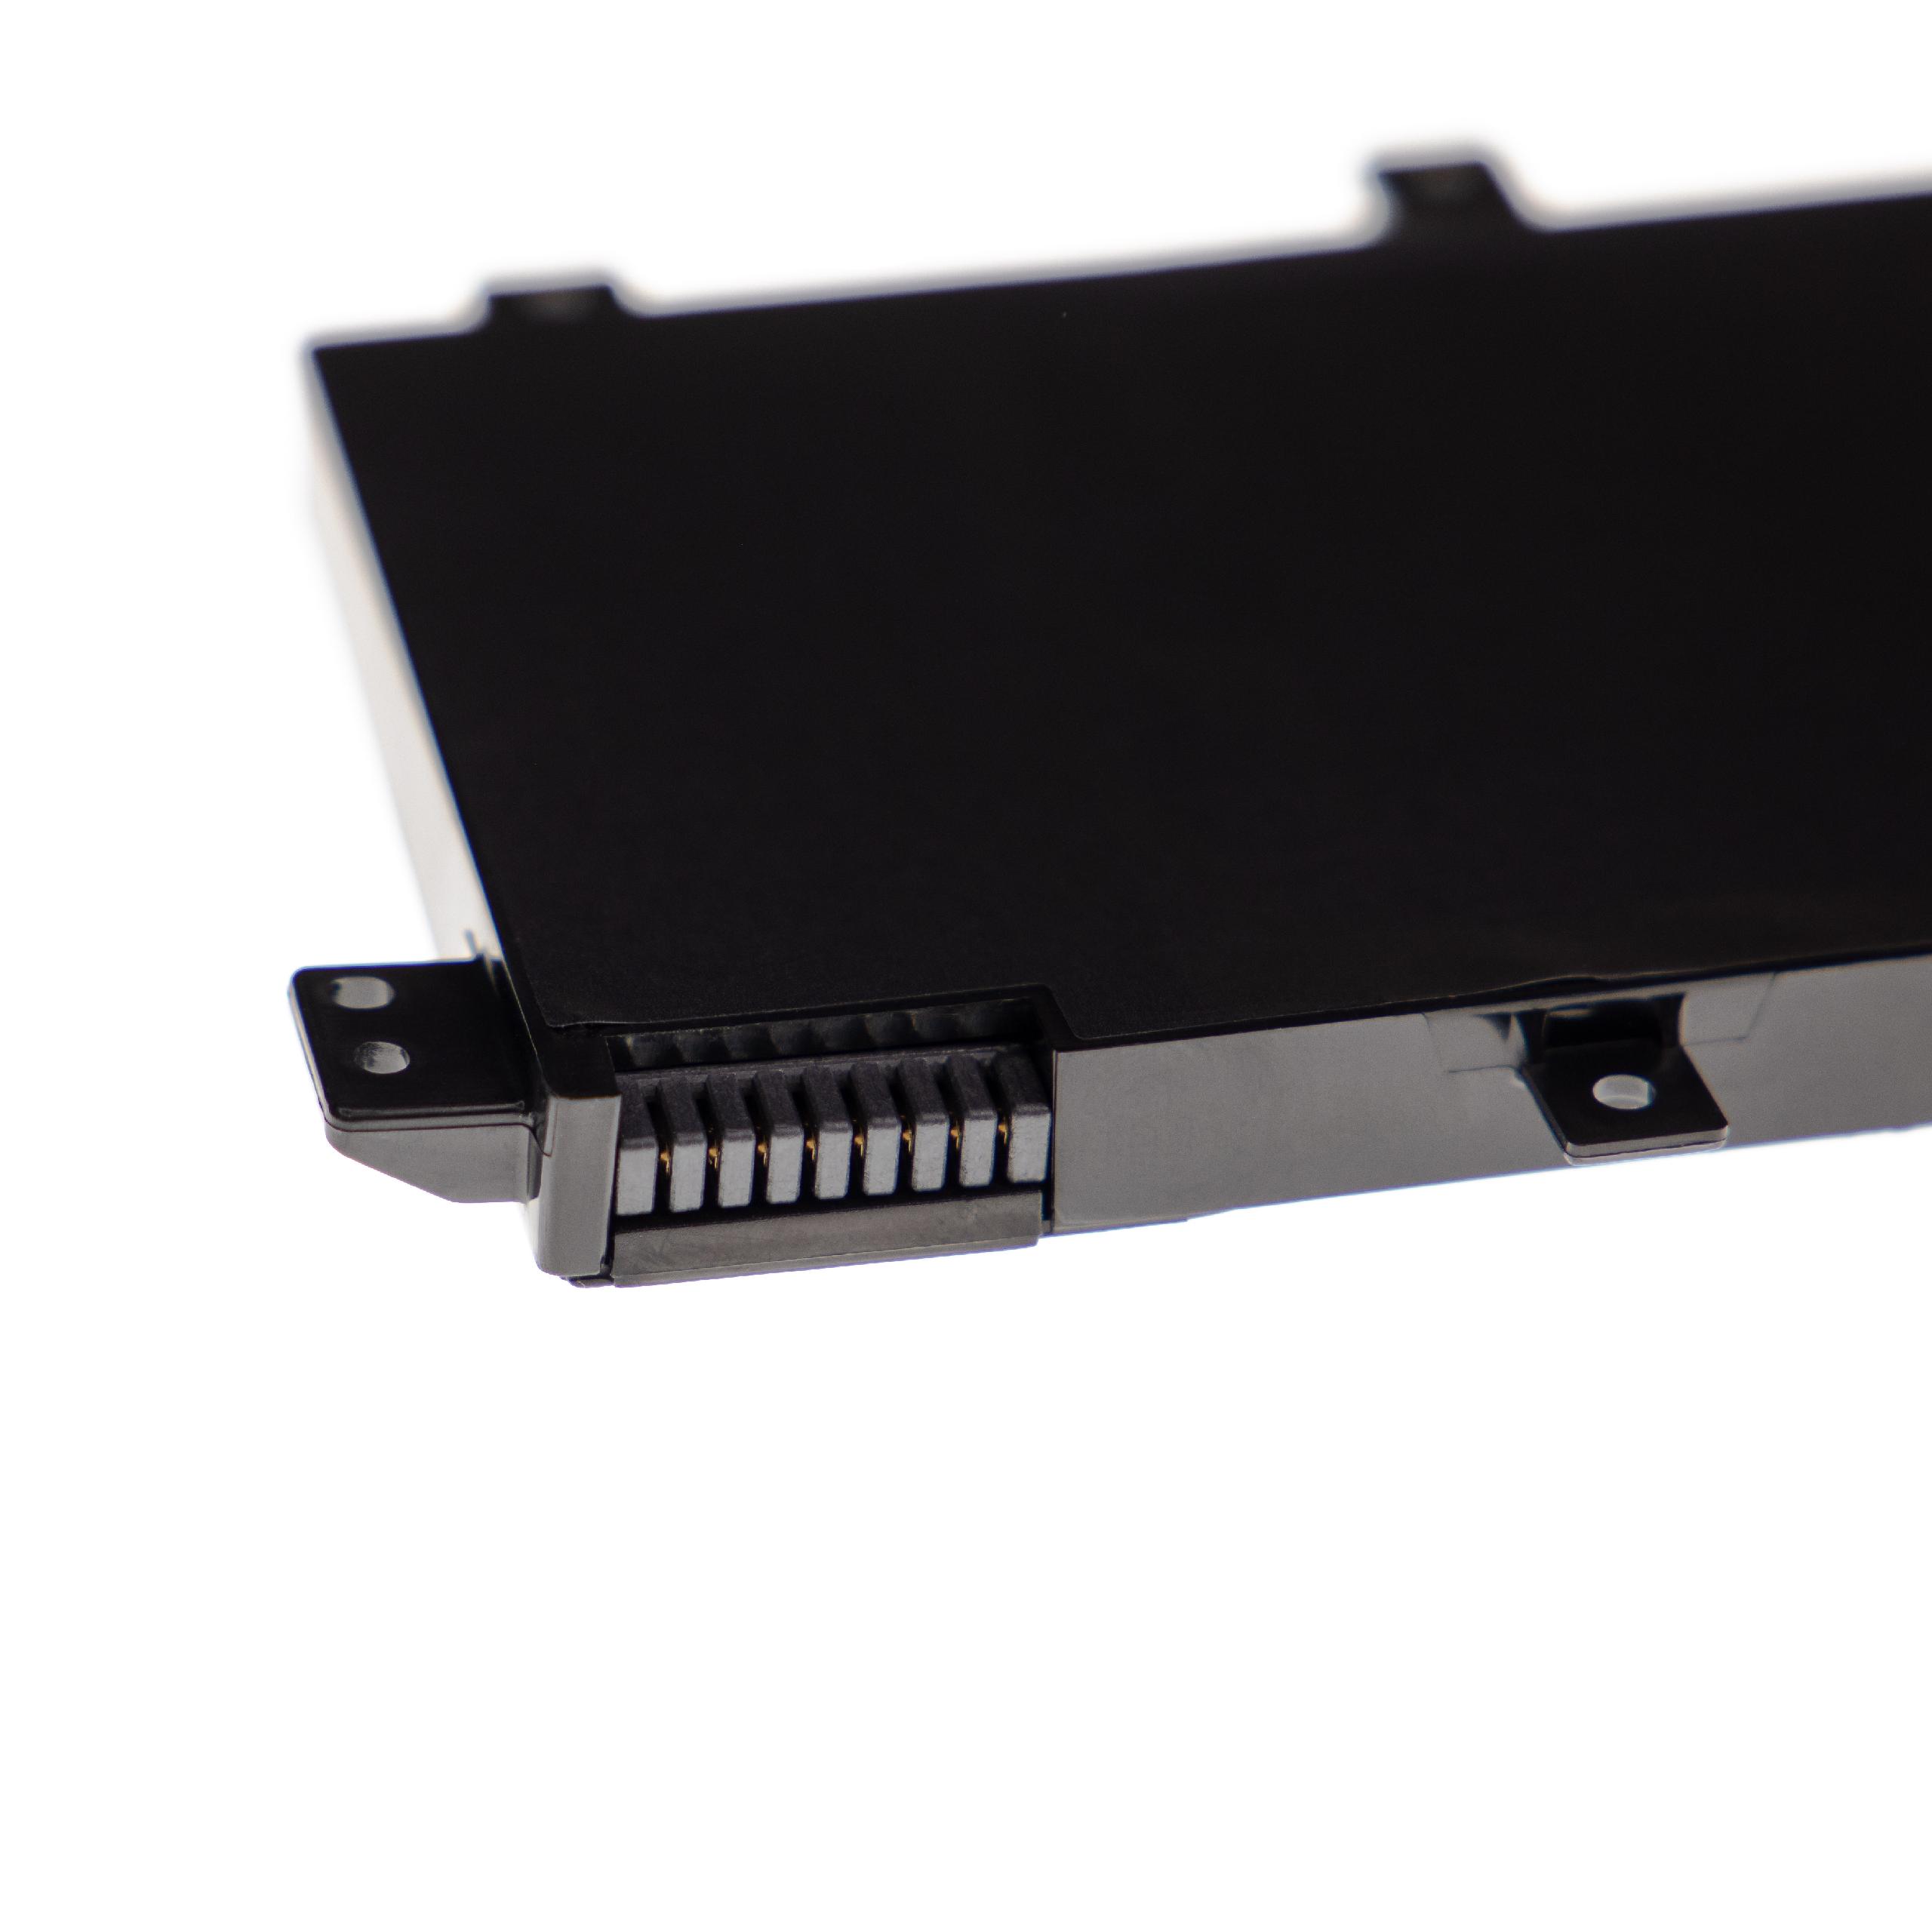 Notebook Battery Replacement for Asus 0B200-01130300, 0B200-01130100 - 4700mAh 7.6V Li-polymer, black